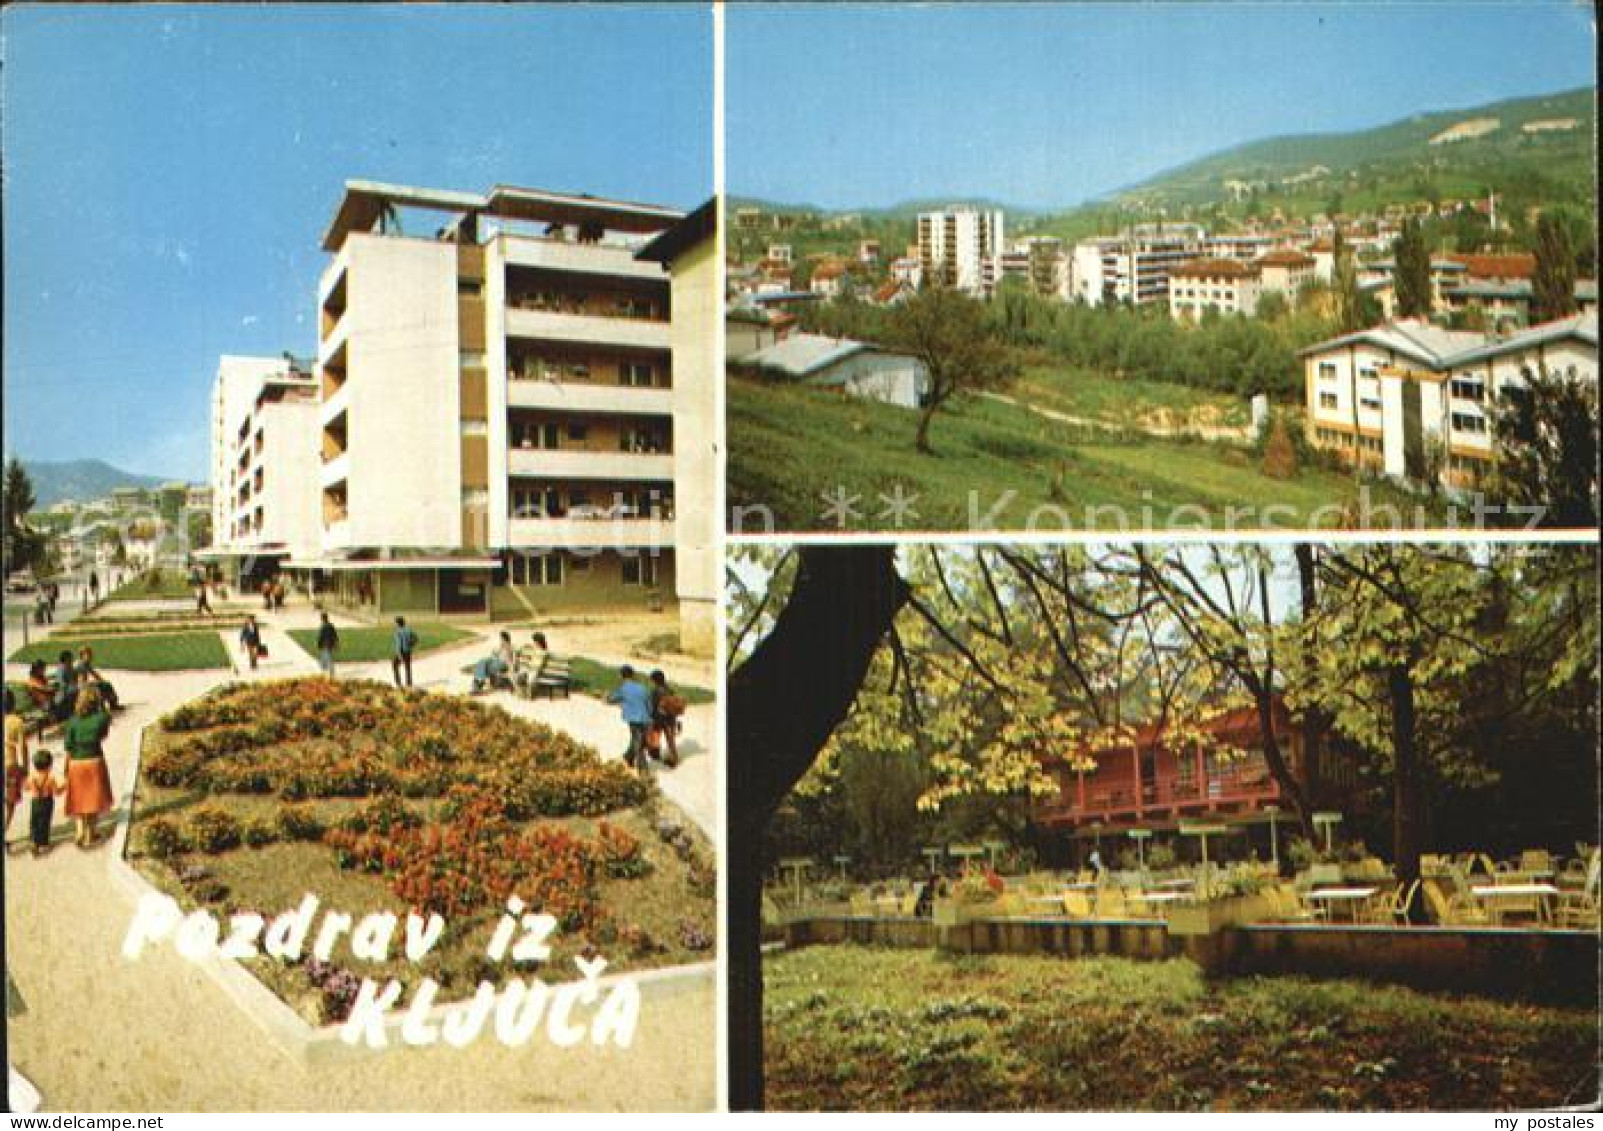 72523422 Kljuc Teilansichten Gartenrestaurant Kljuc - Bosnie-Herzegovine